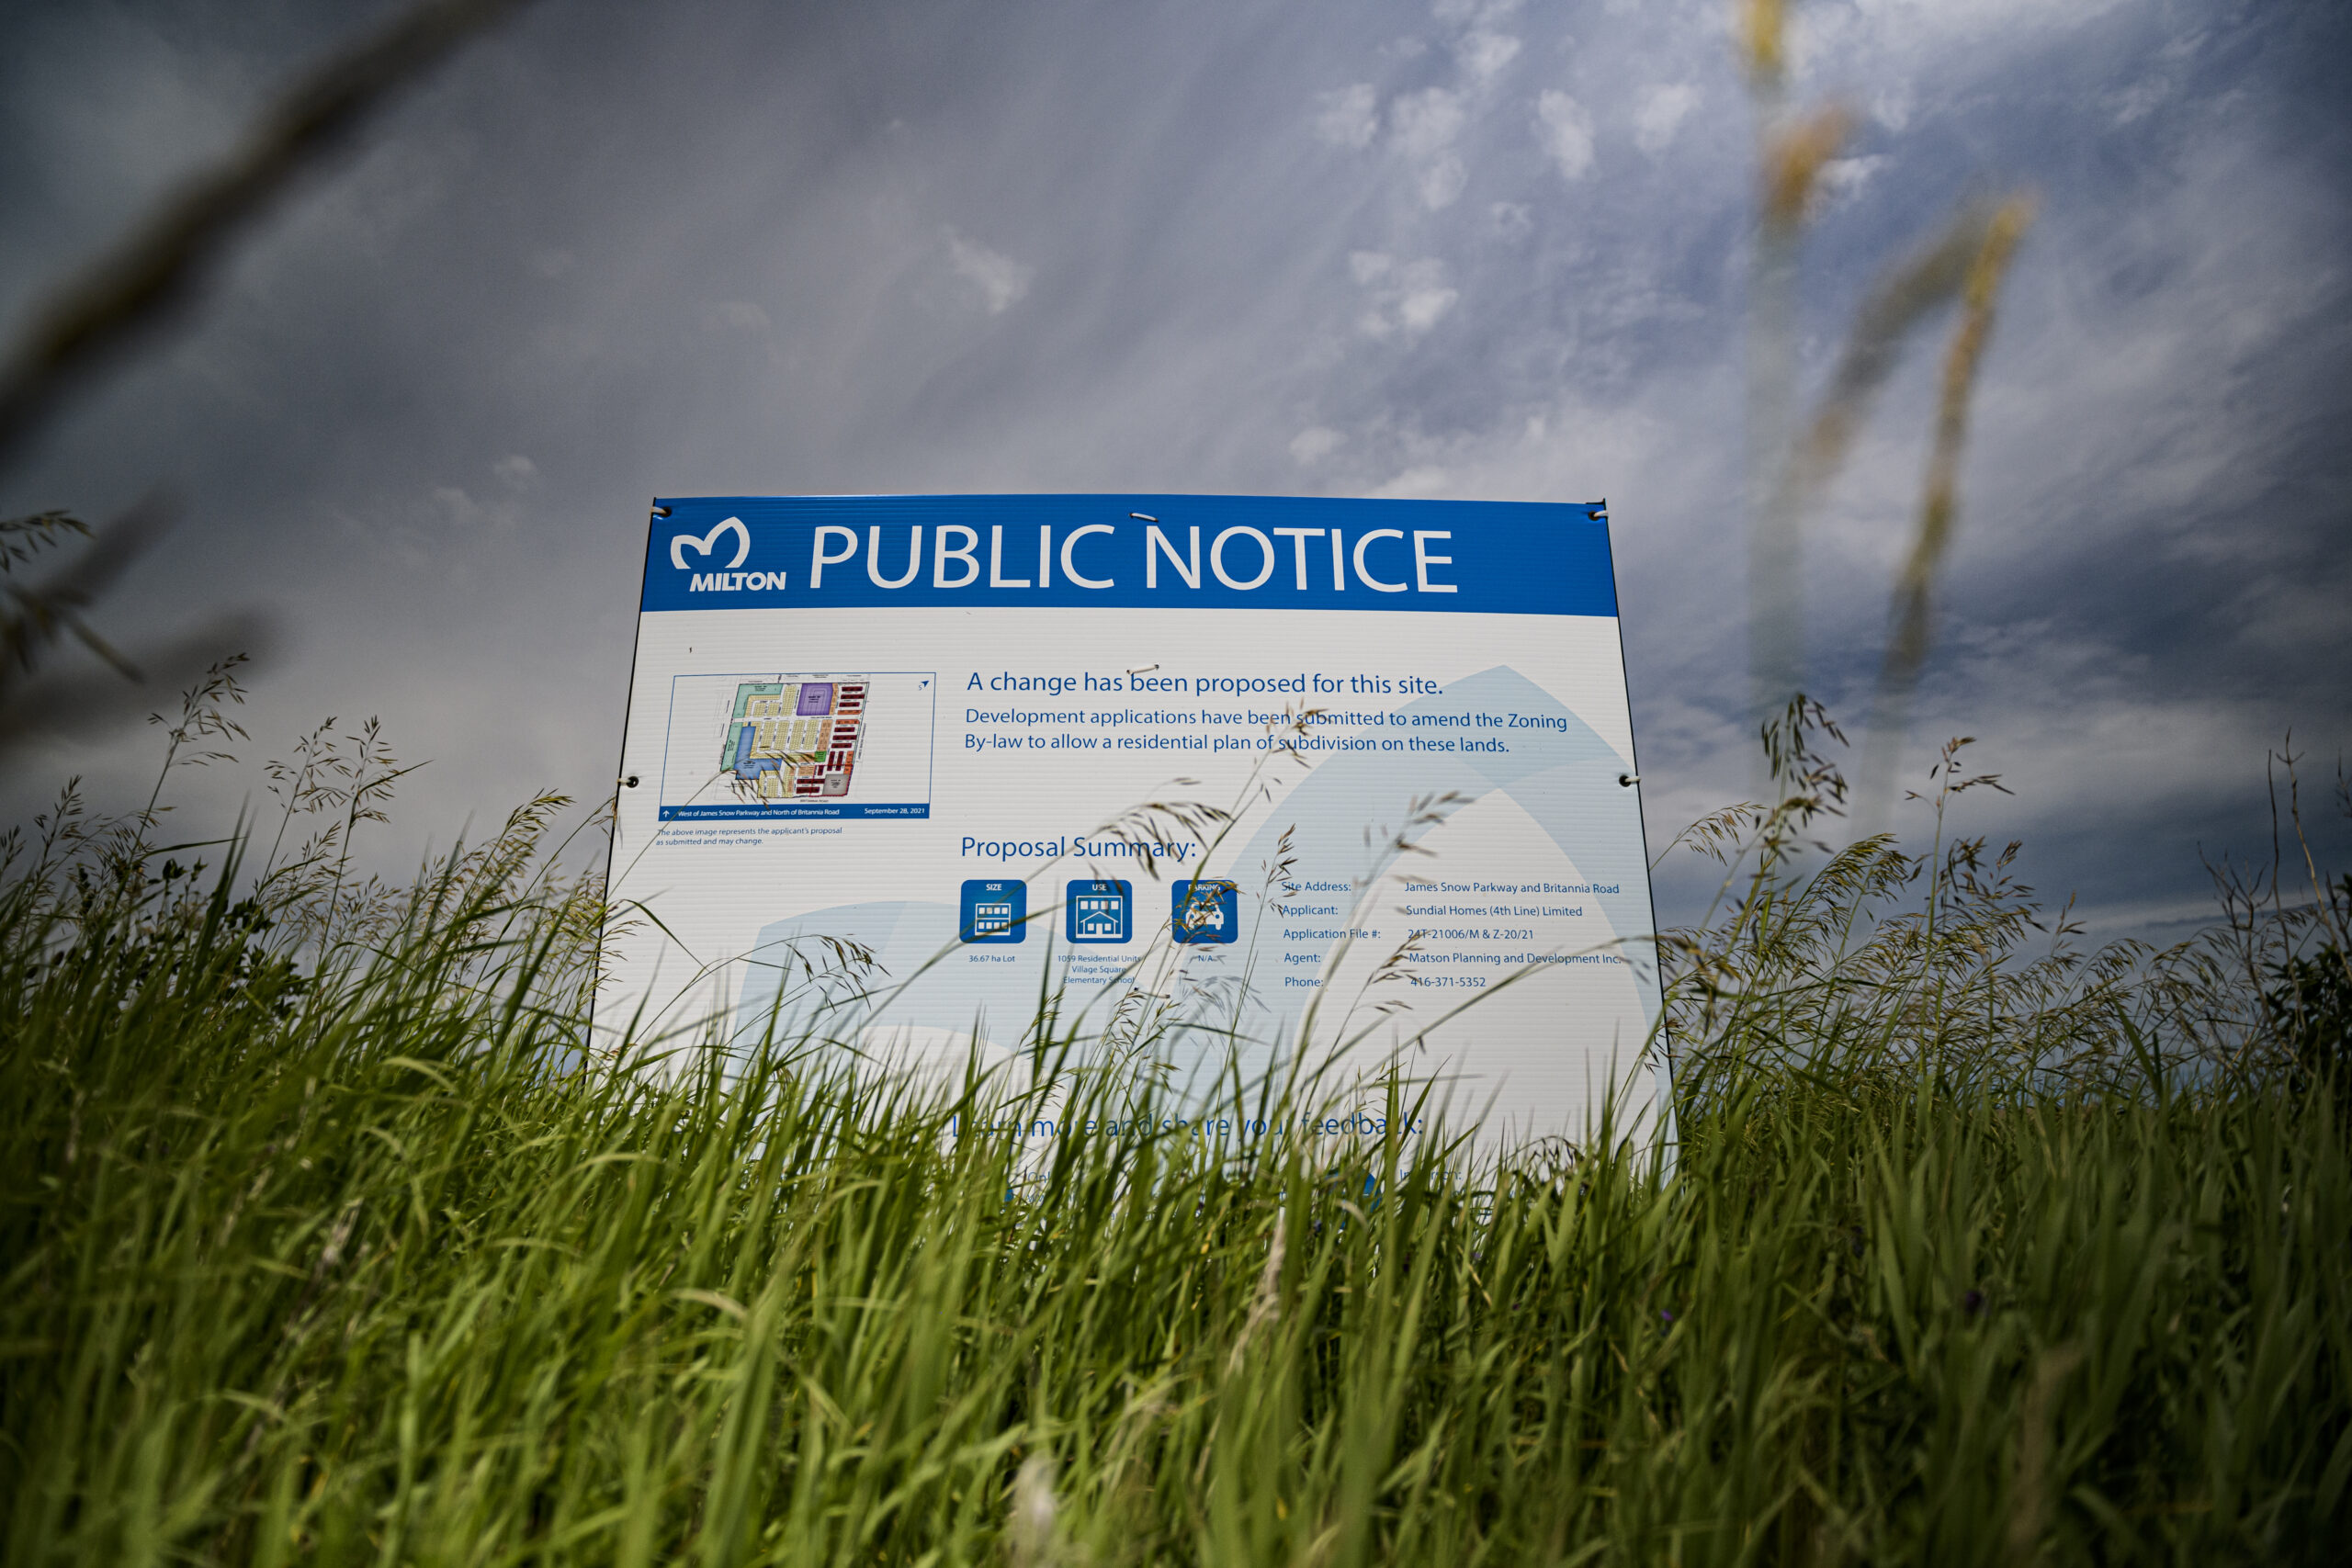 A public notice sign in Halton Region farmland that outlines a new development